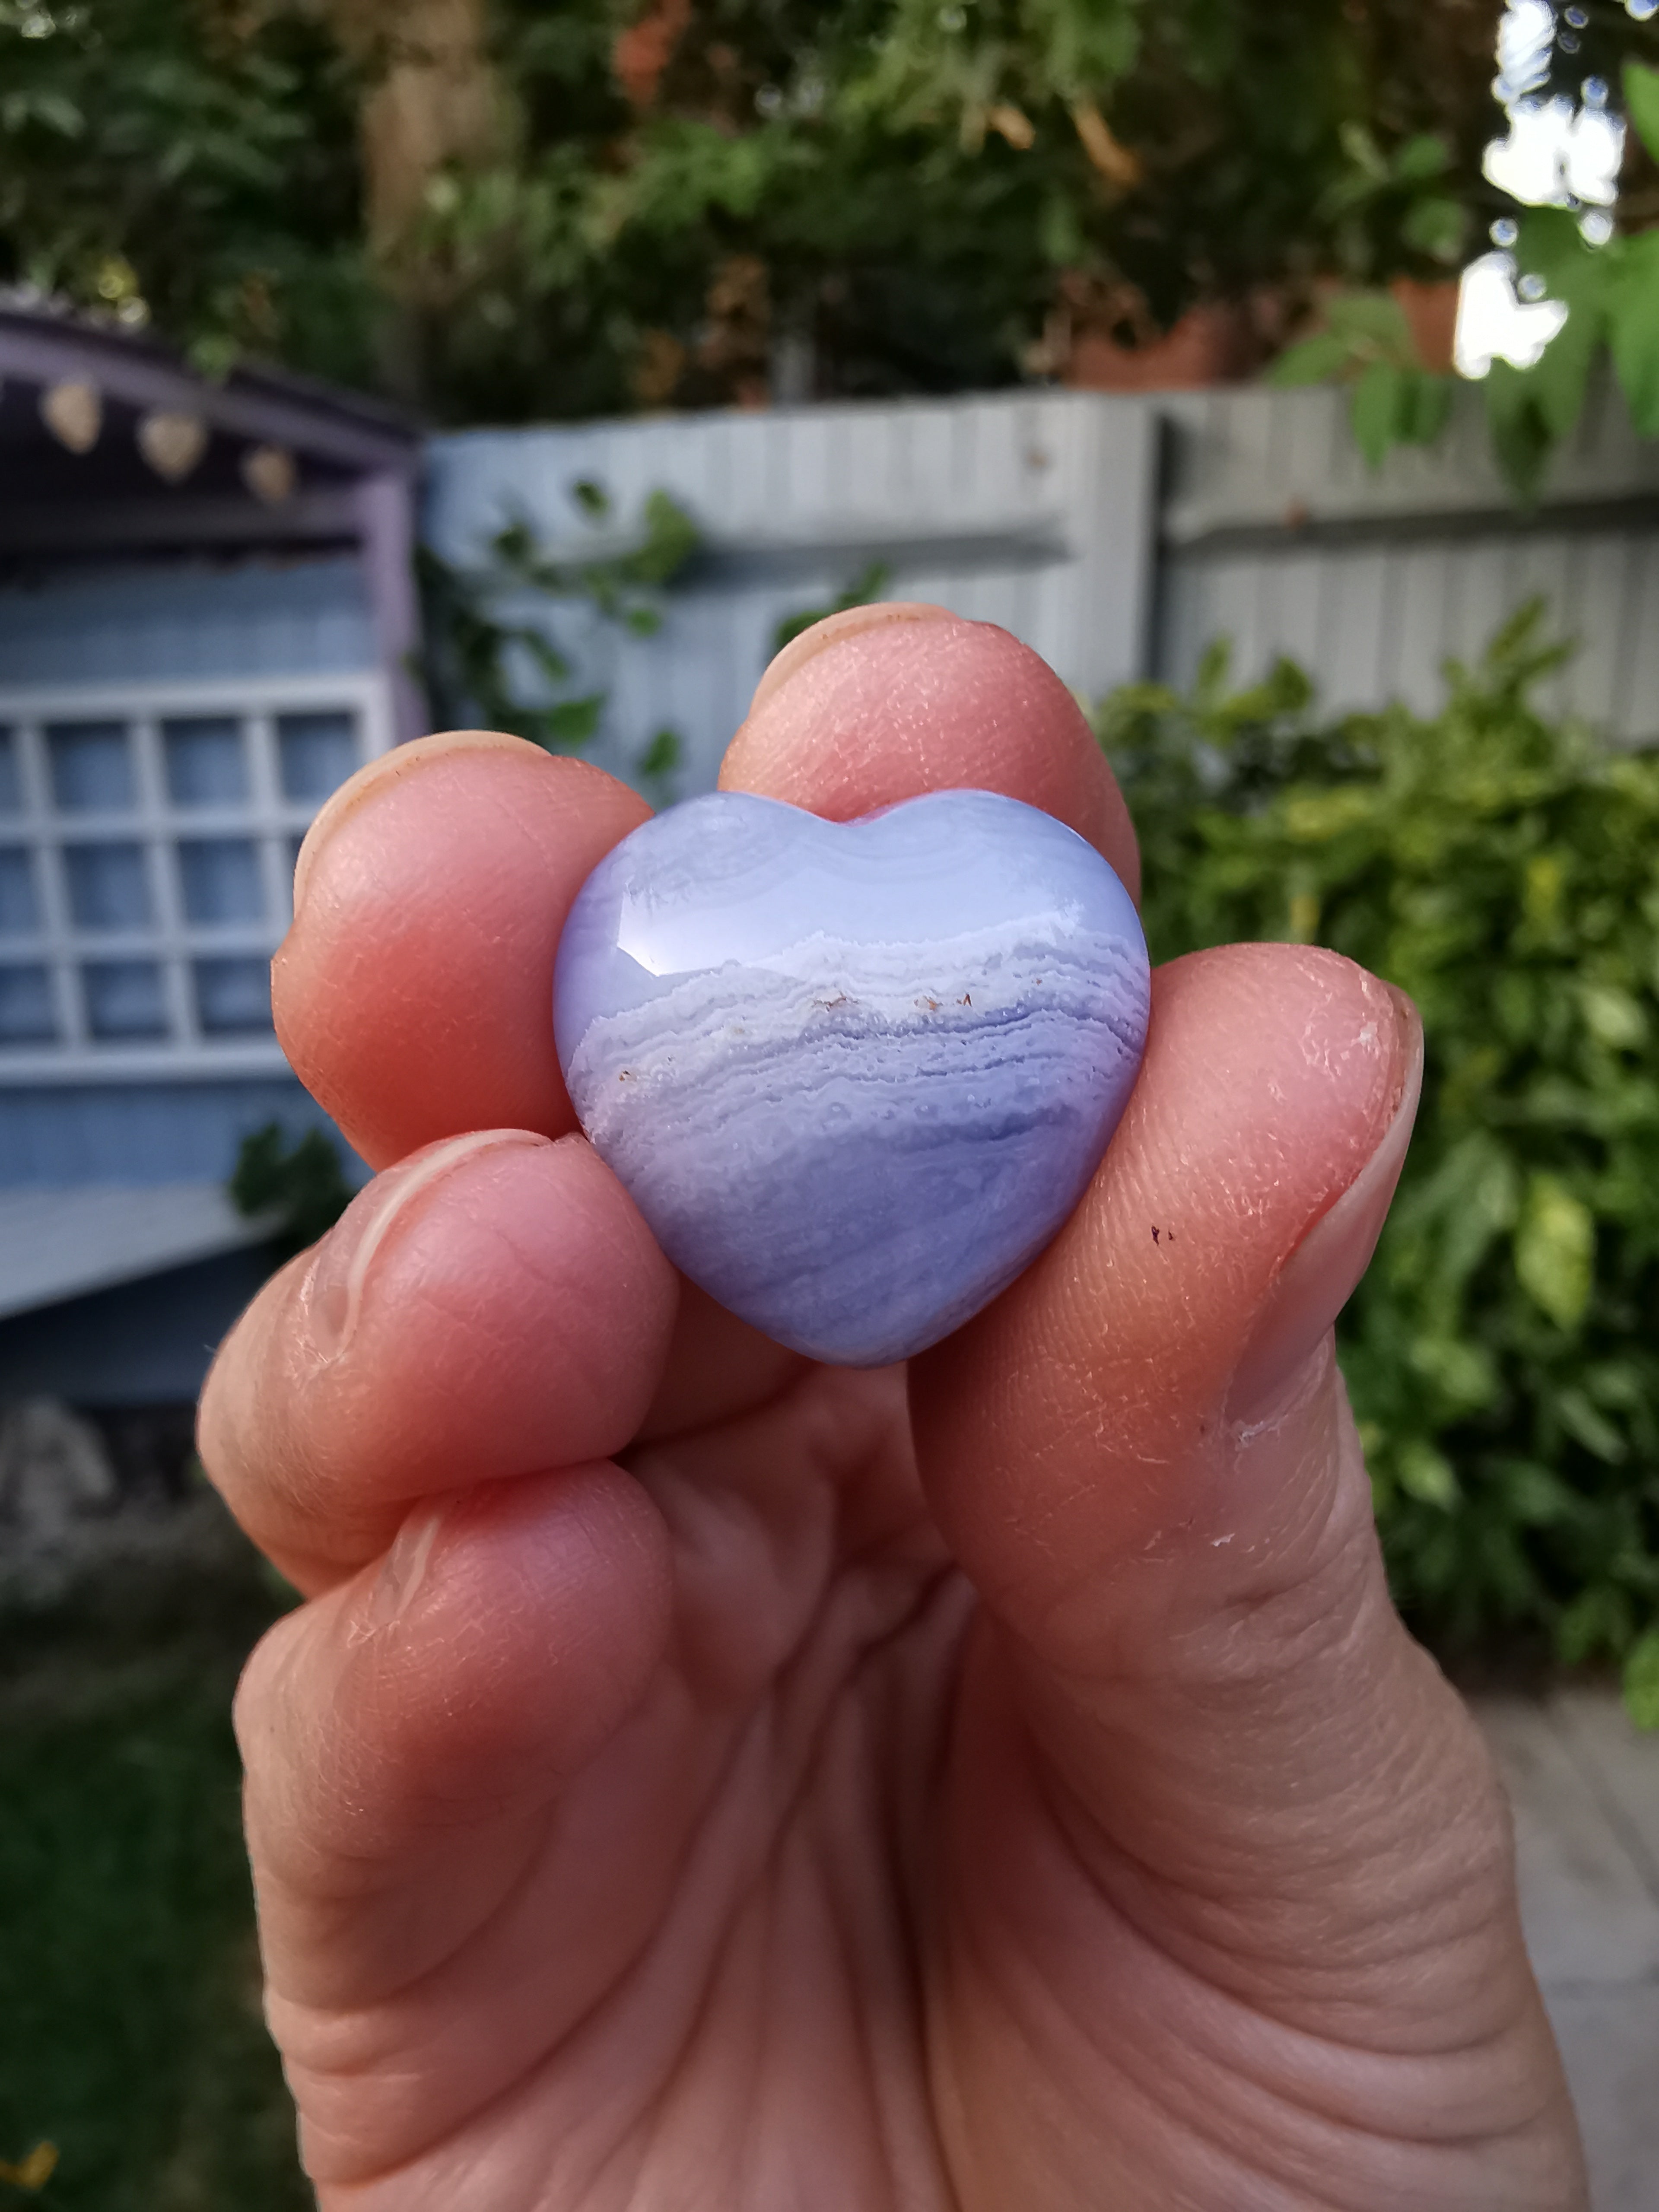 Blue Lace Agate Heart - 2cm (width)